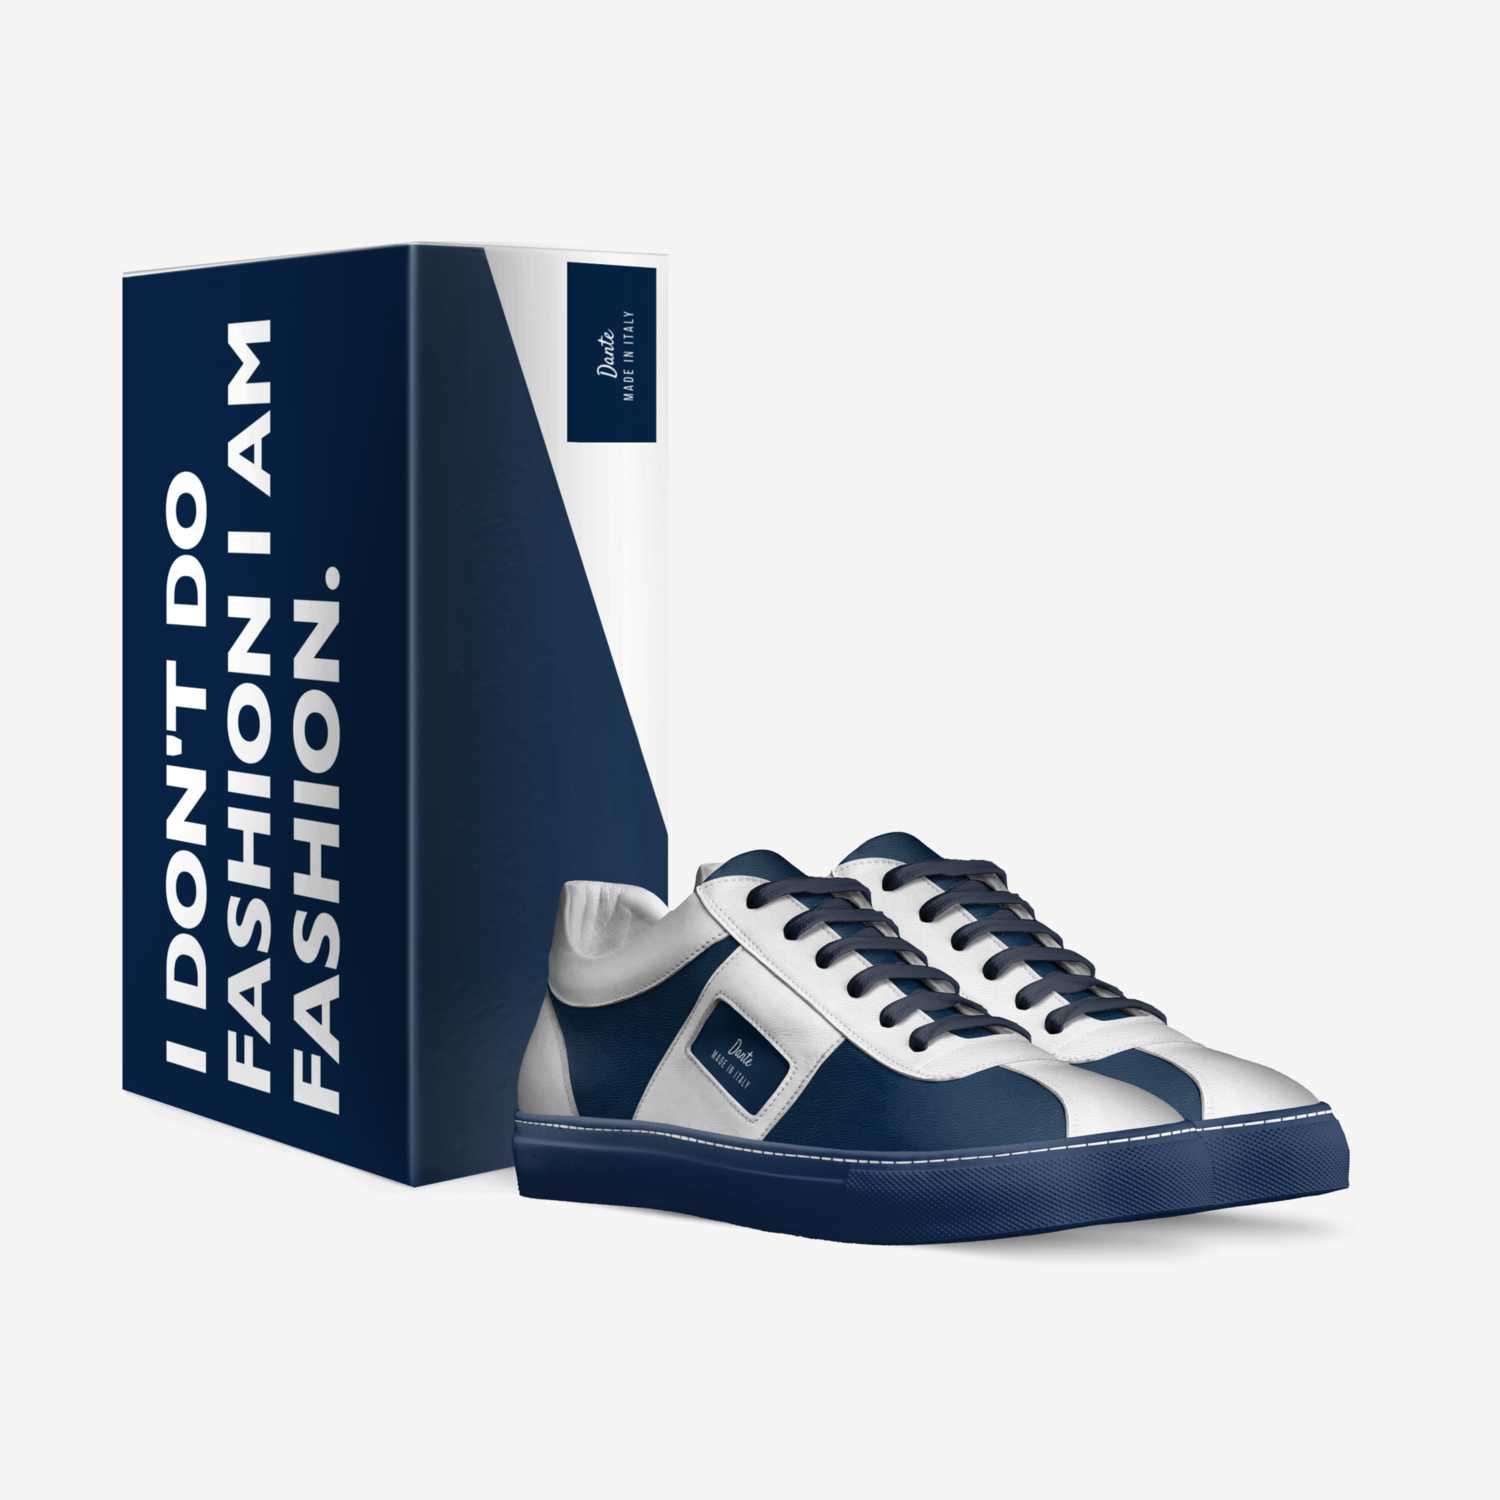 Dante custom made in Italy shoes by Antonios Kerasnoudis | Box view